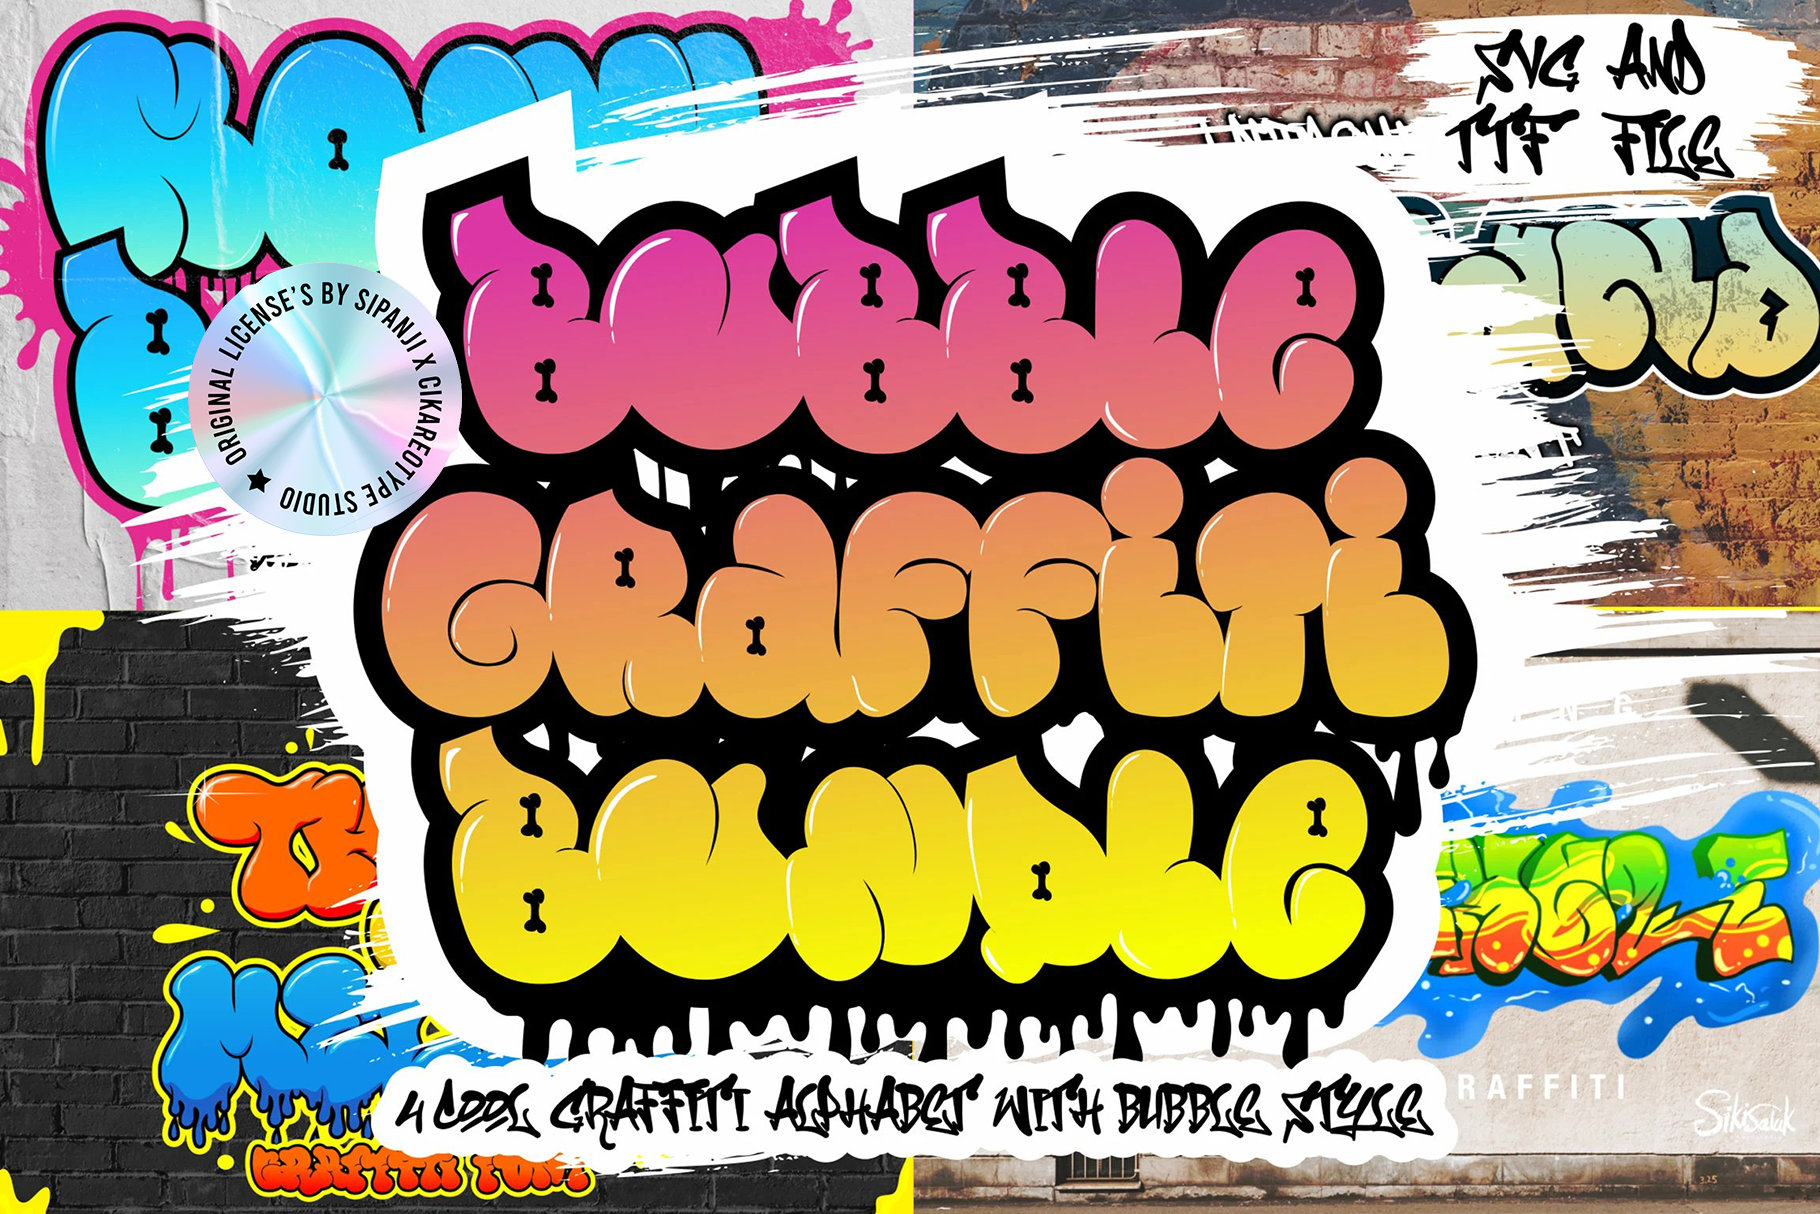 Paint Splatter Splash Paintball Cool Grunge Graffiti Artist Retro